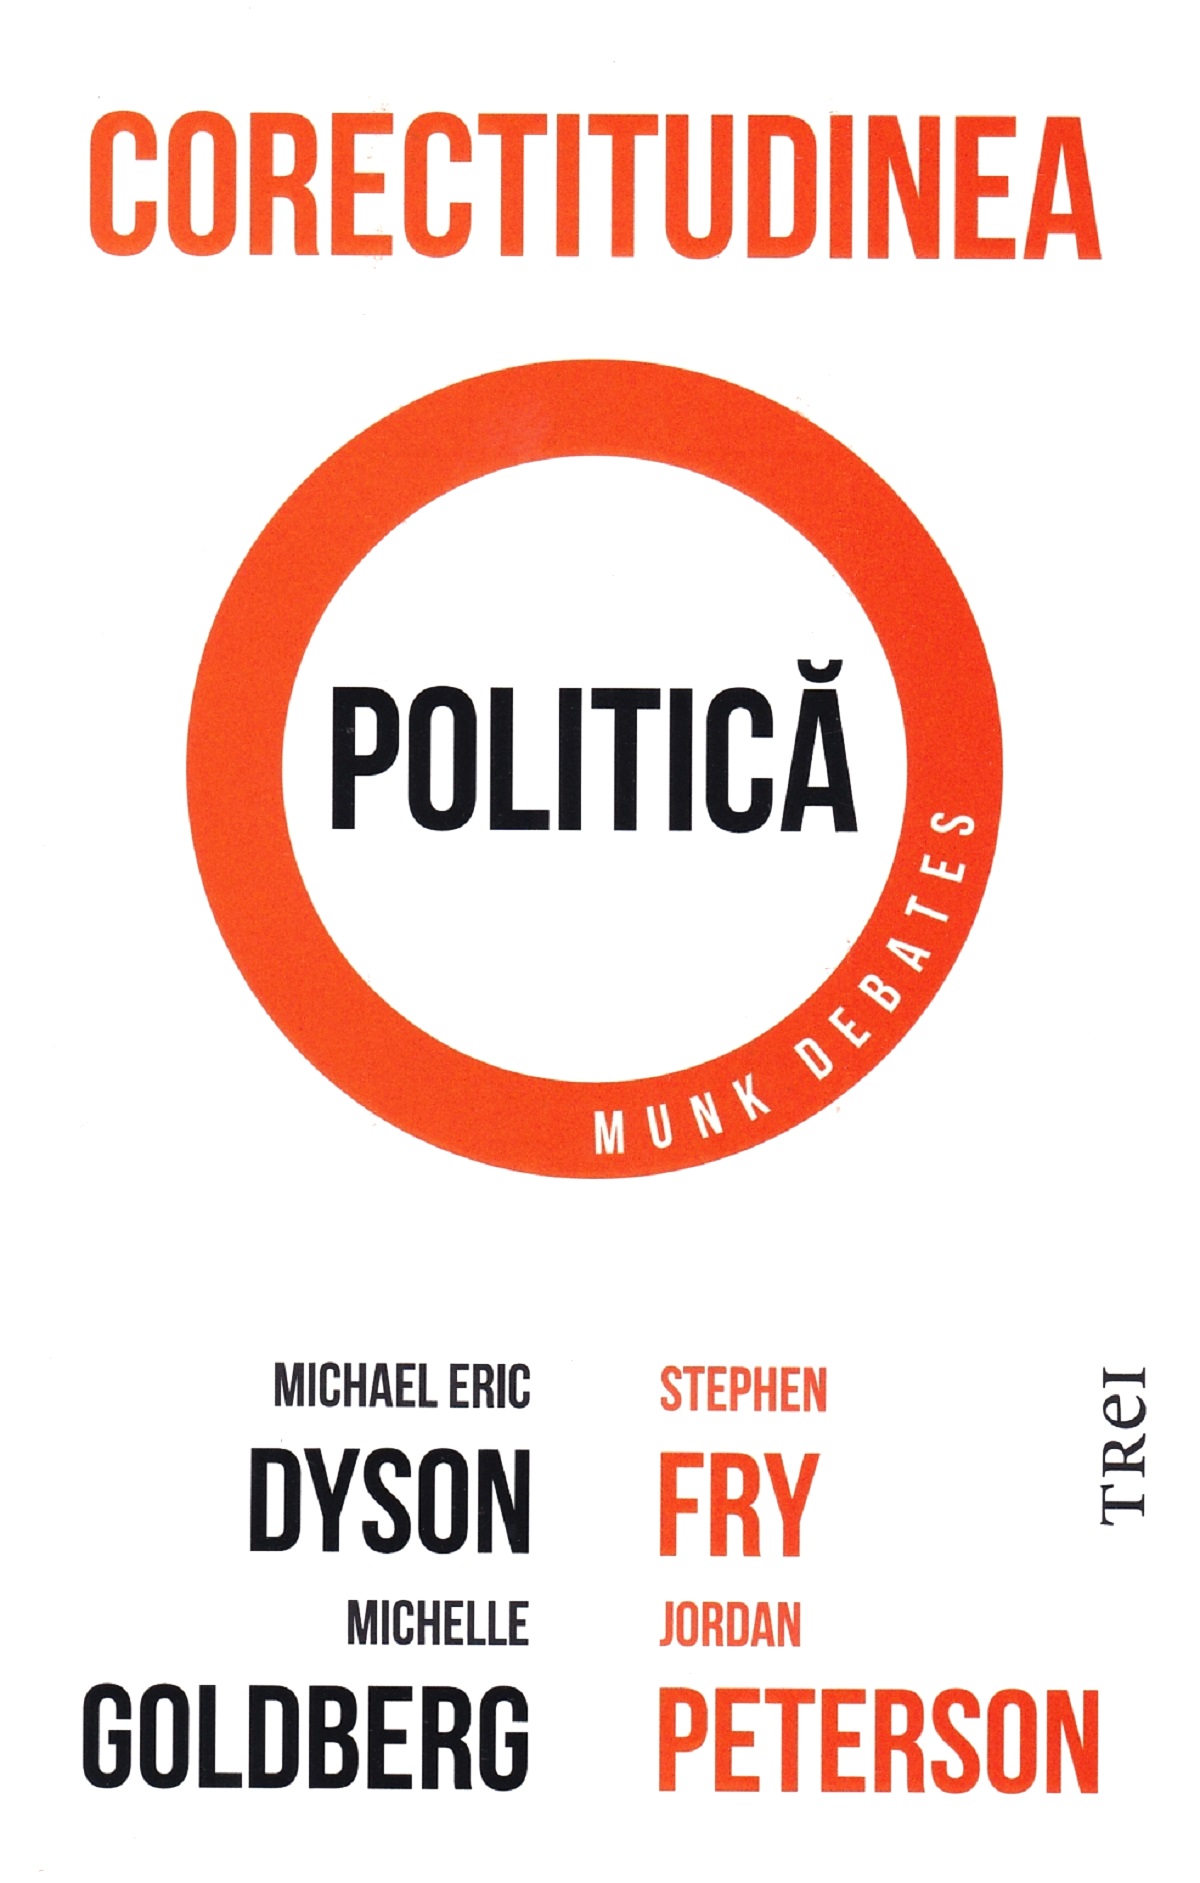 Corectitudinea politica | Stephen Fry, Jordan Peterson, Michael Eric Dyson, Michelle Goldberg carte